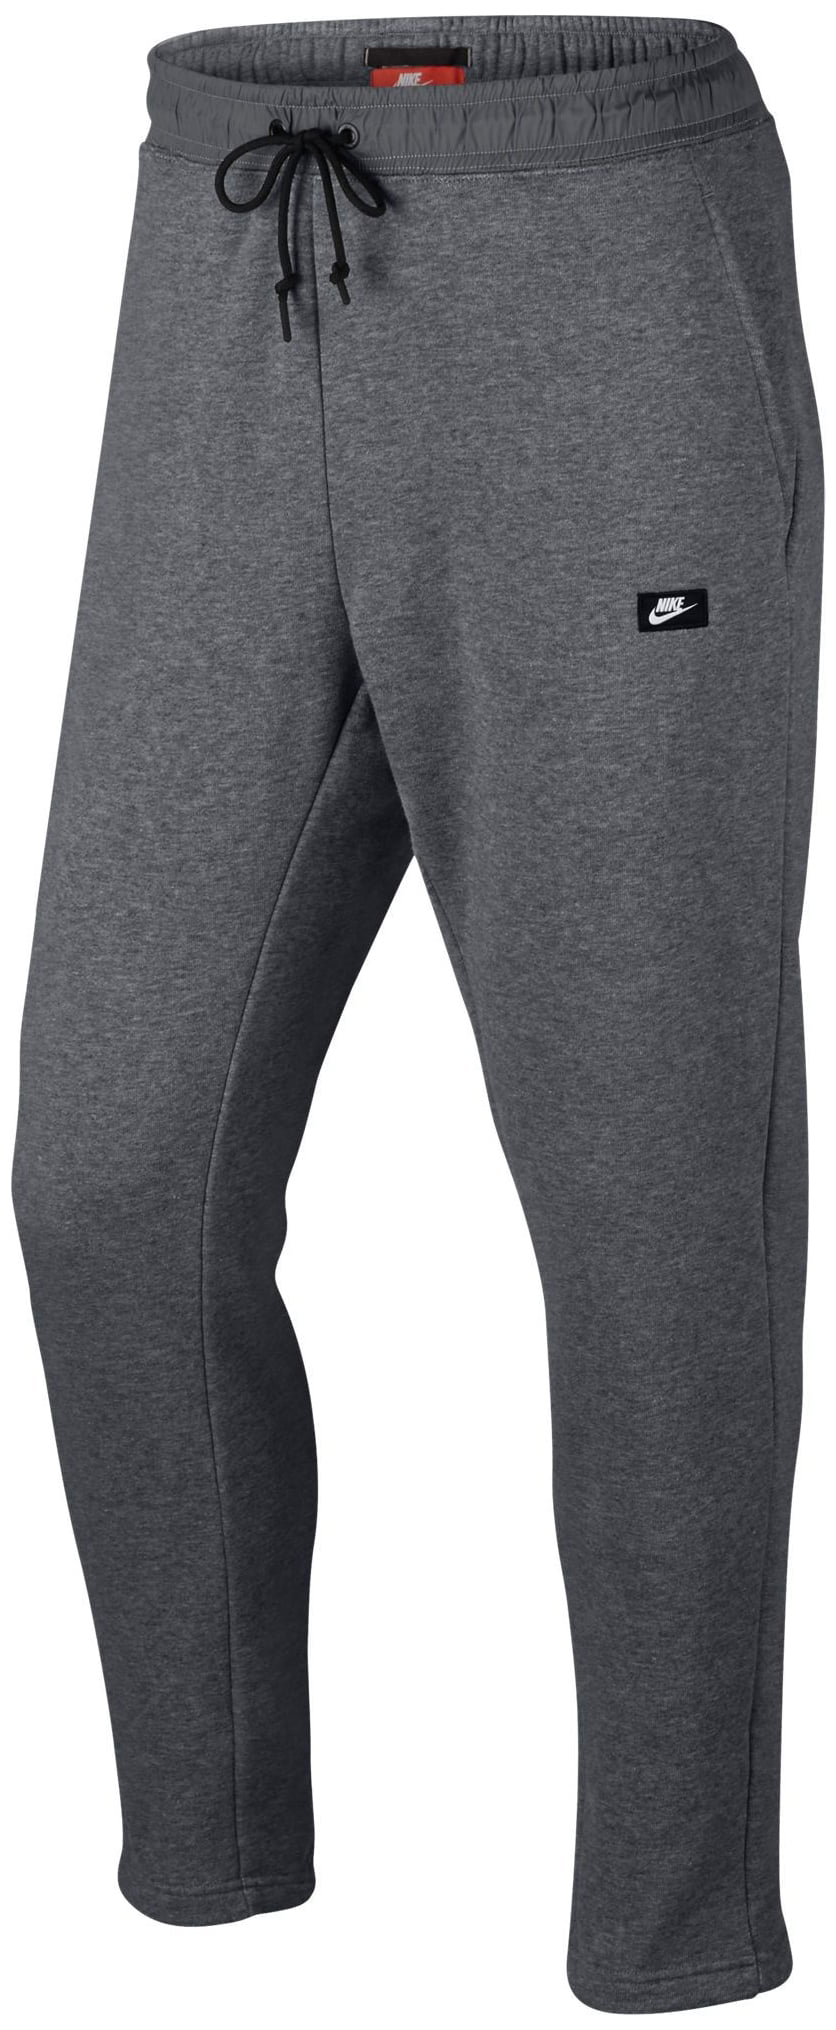 Nike Sportswear modern mens pants 805168-091 - Walmart.com